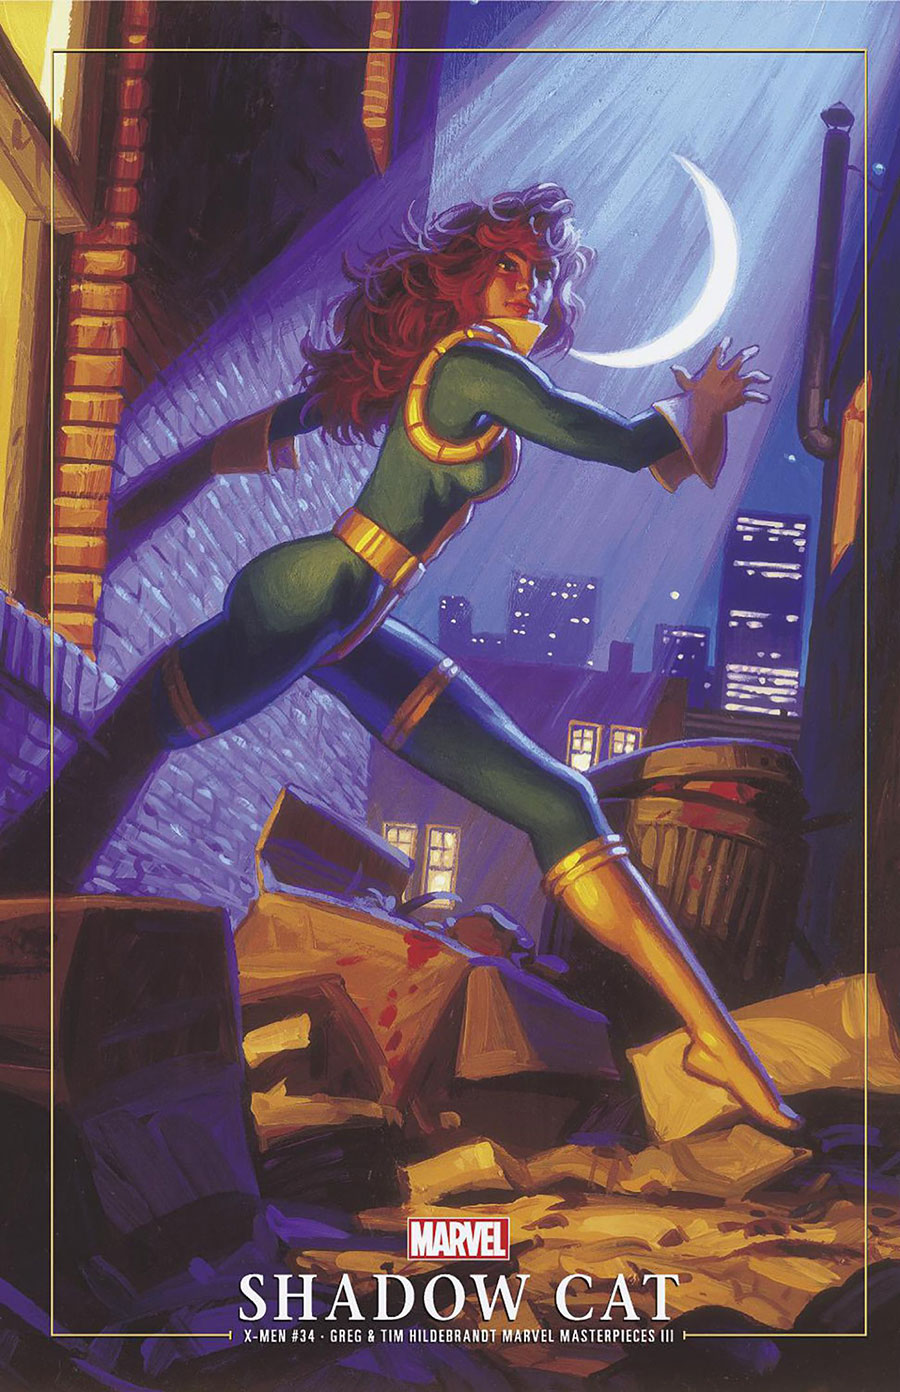 X-Men Vol 6 #34 Cover B Variant Greg Hildebrandt & Tim Hildebrandt Marvel Masterpieces III Shadowcat Cover (Fall Of The House Of X Tie-In)